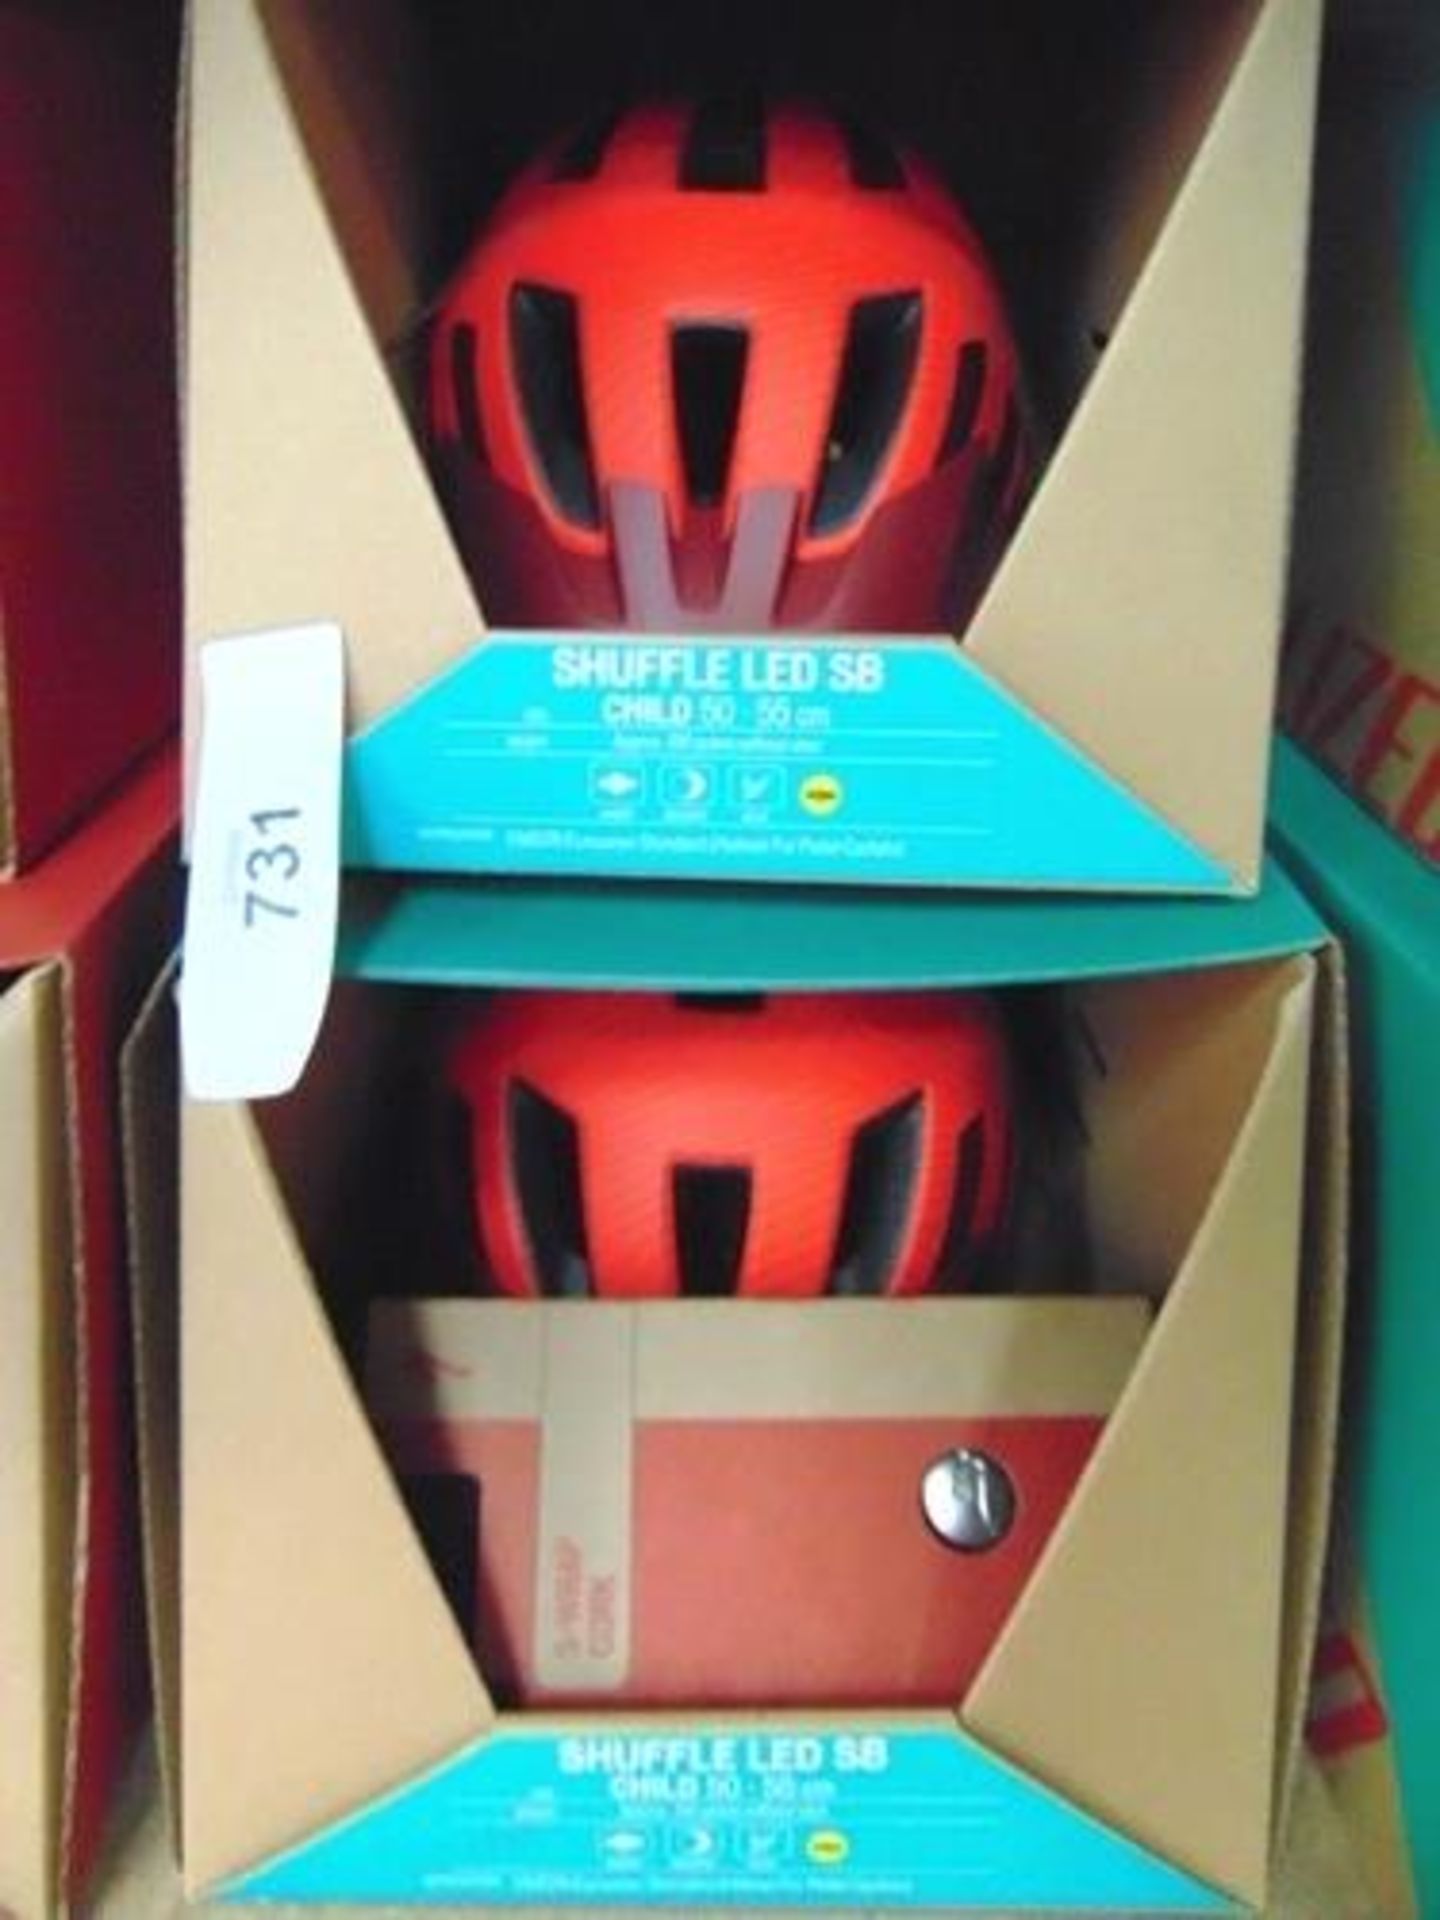 2 x Specialized Shuffle LED SB children's bike helmets - Size 50 - 55cm - new in box (GS14)